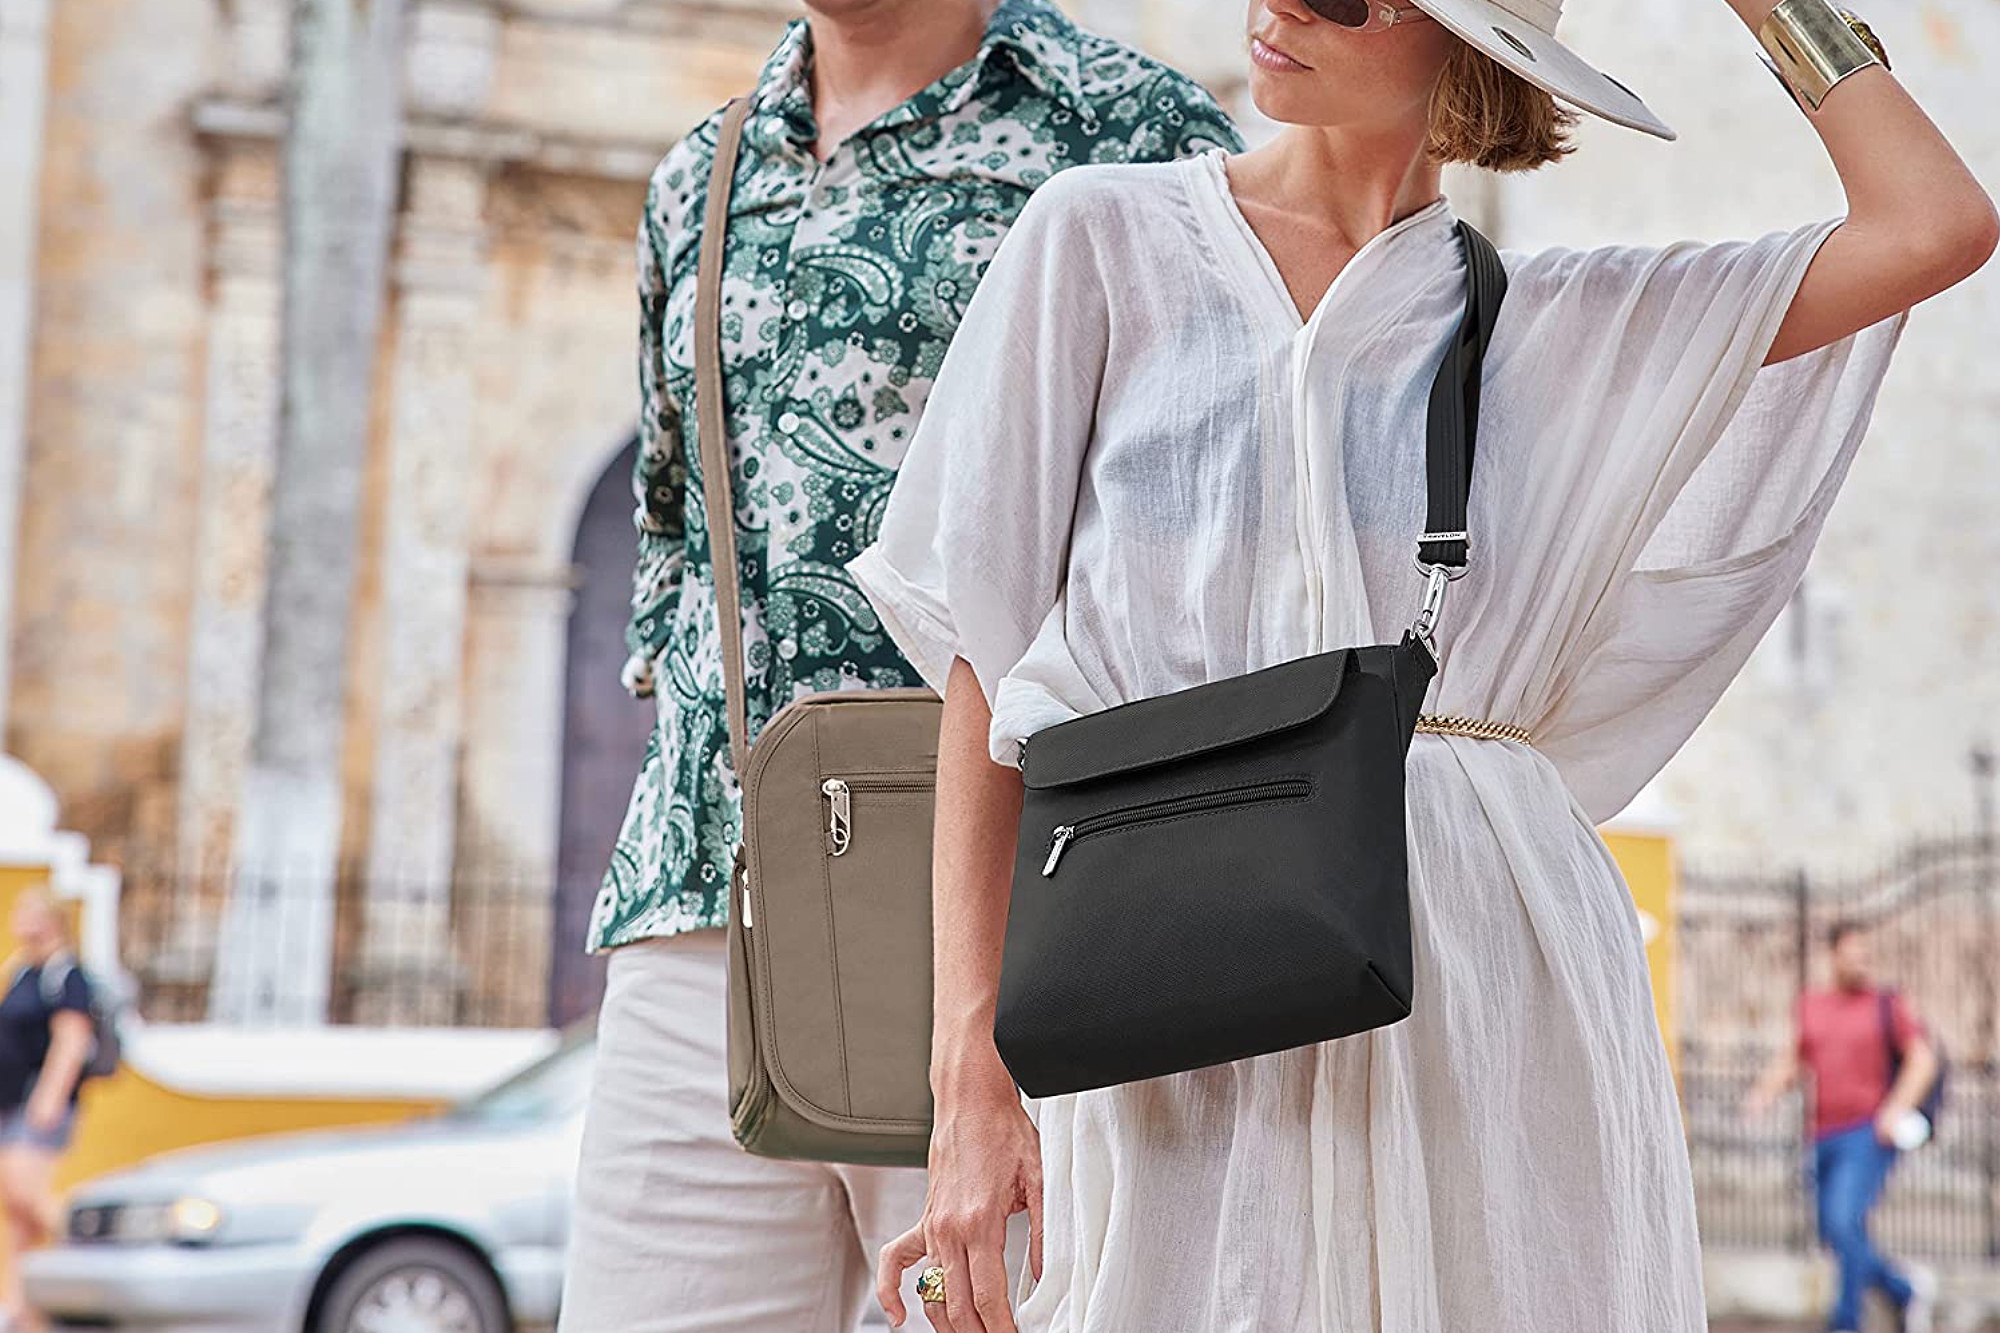  Small Crossbody Bags For Women - Leather handbag